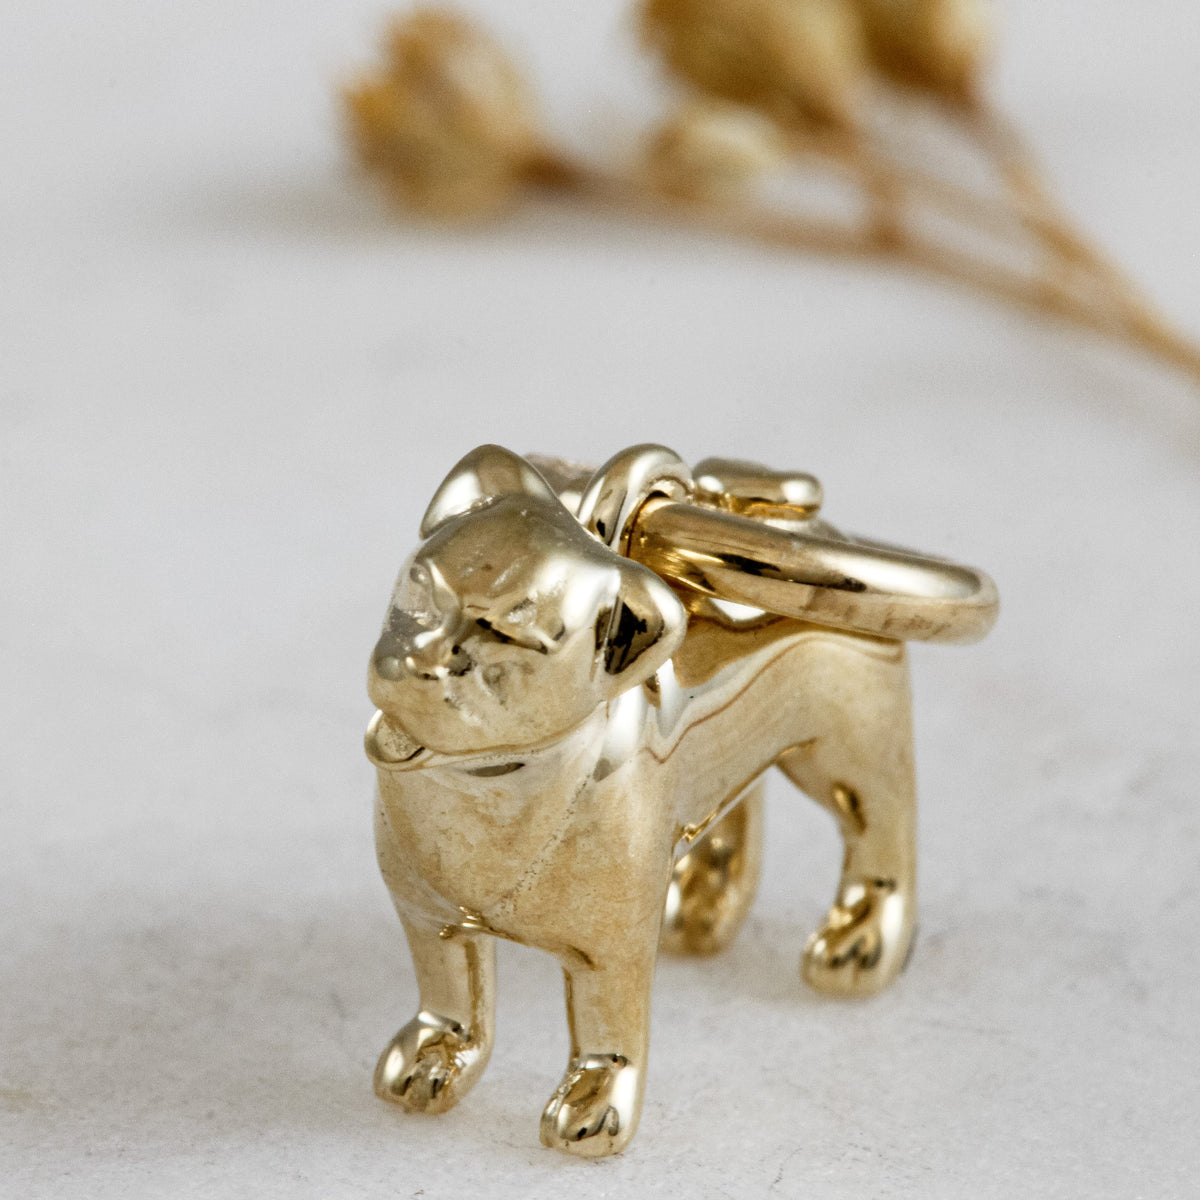 pug solid gold dog charm for a necklace or bracelet